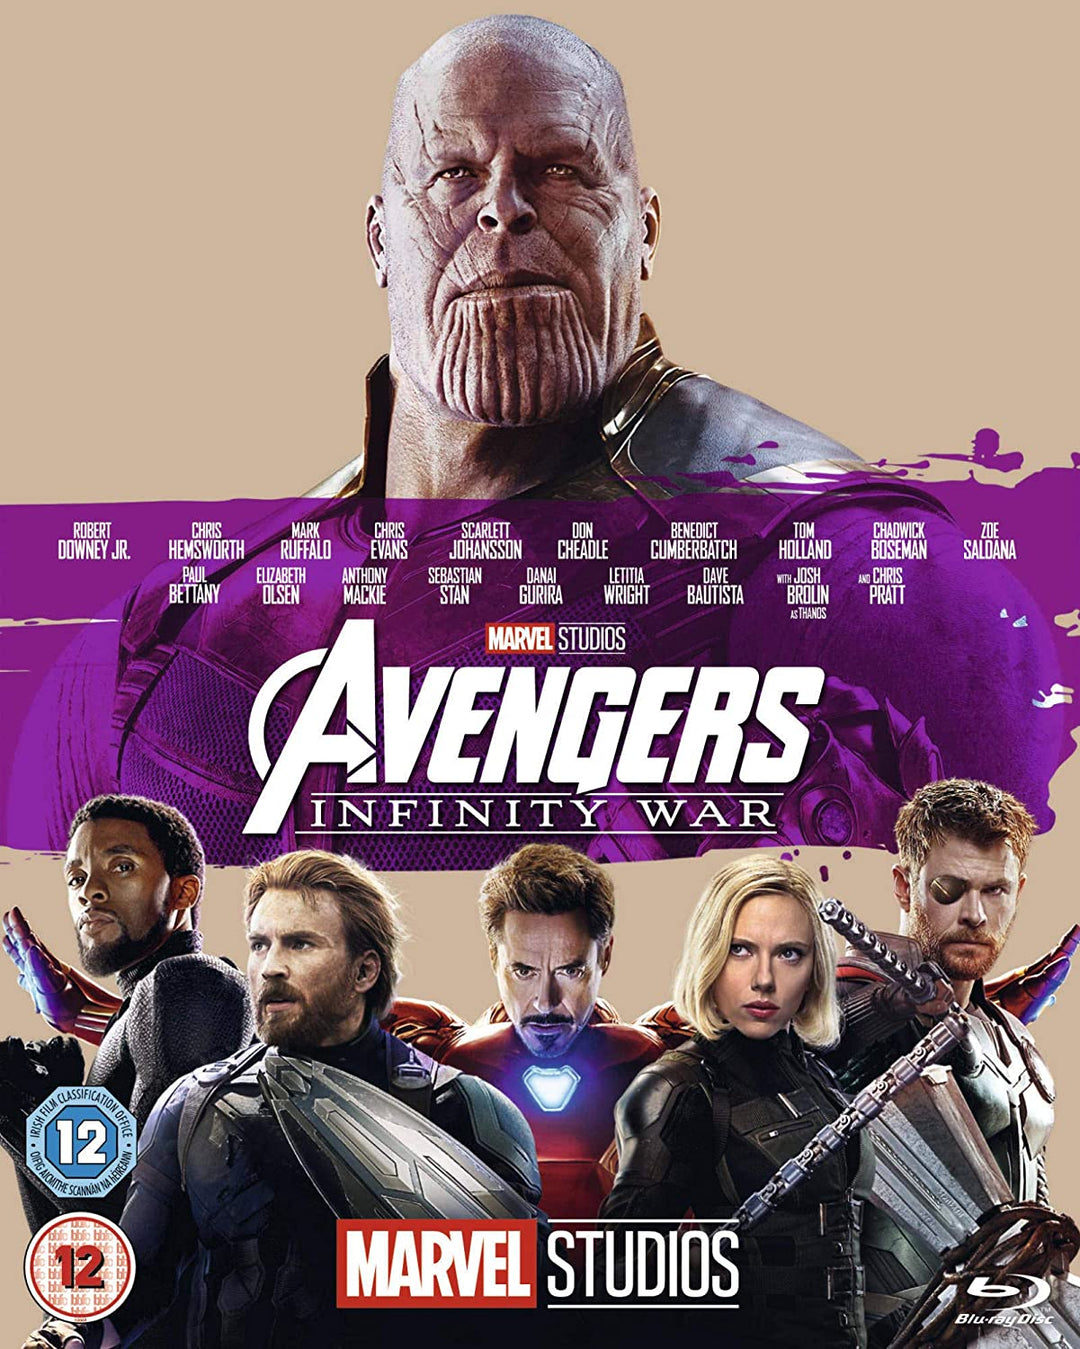 Marvel Studios Avengers: Infinity War - Action/Adventure [Blu-Ray]